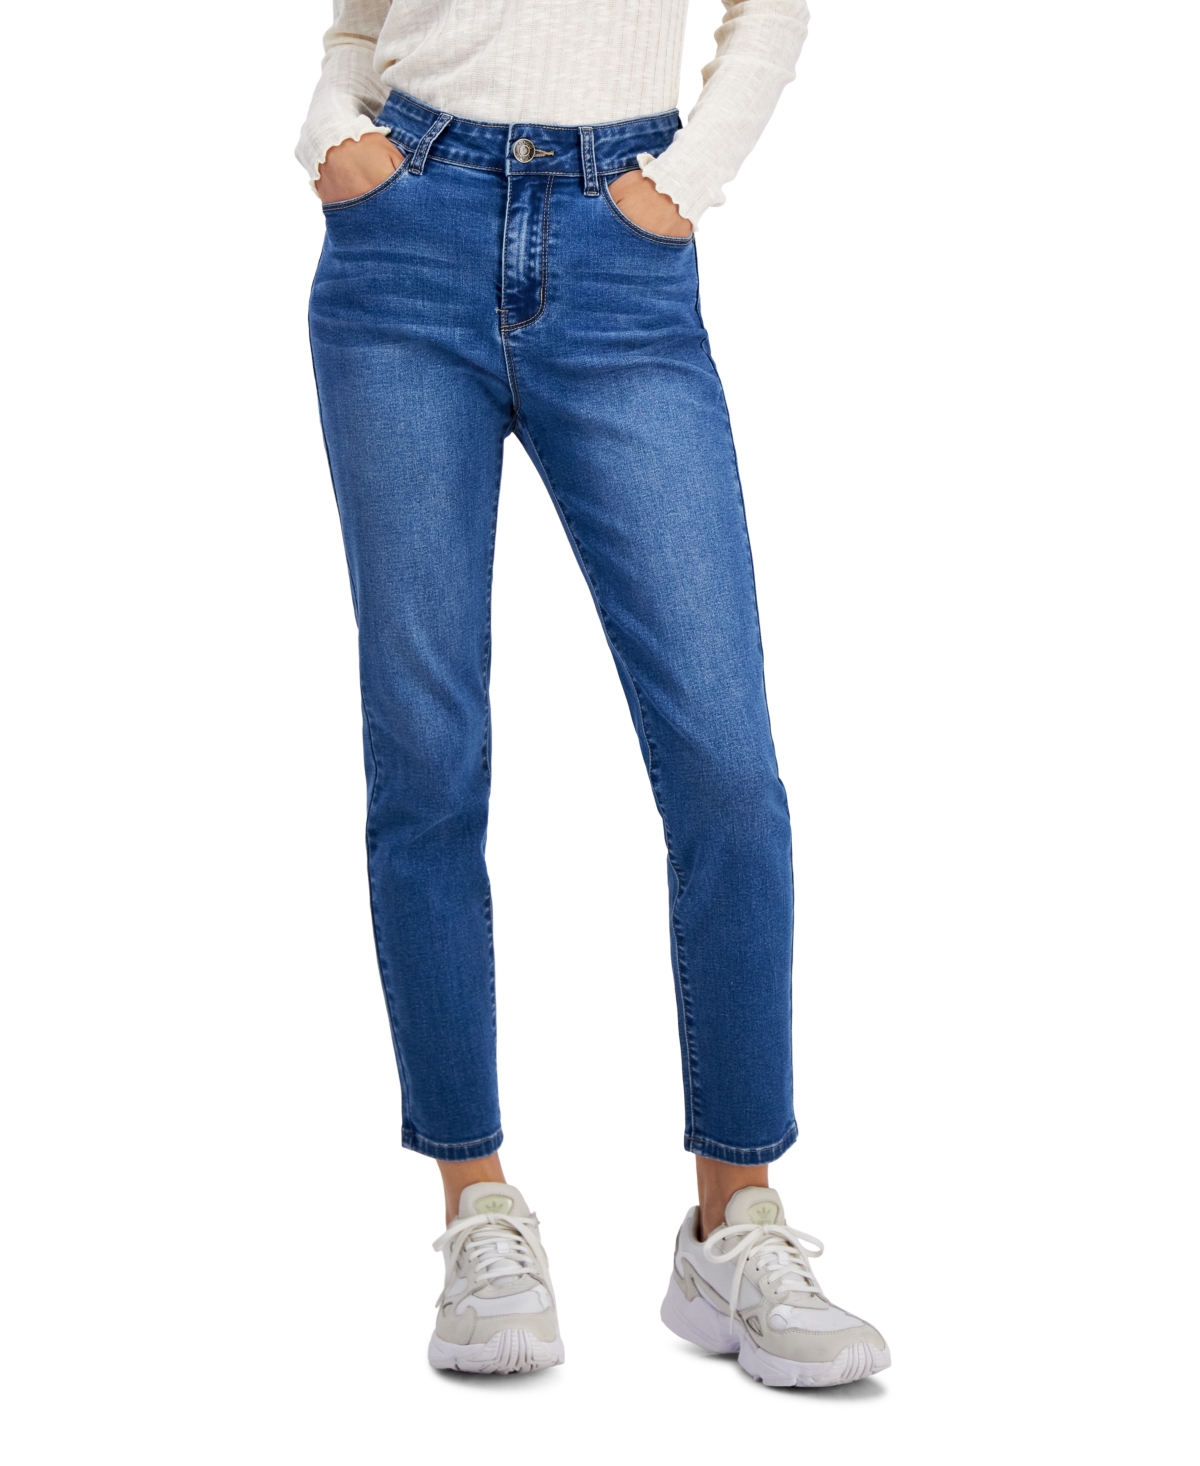 Juniors' High-Waisted Soft-Stretch Skinny Jeans - Medium Wash